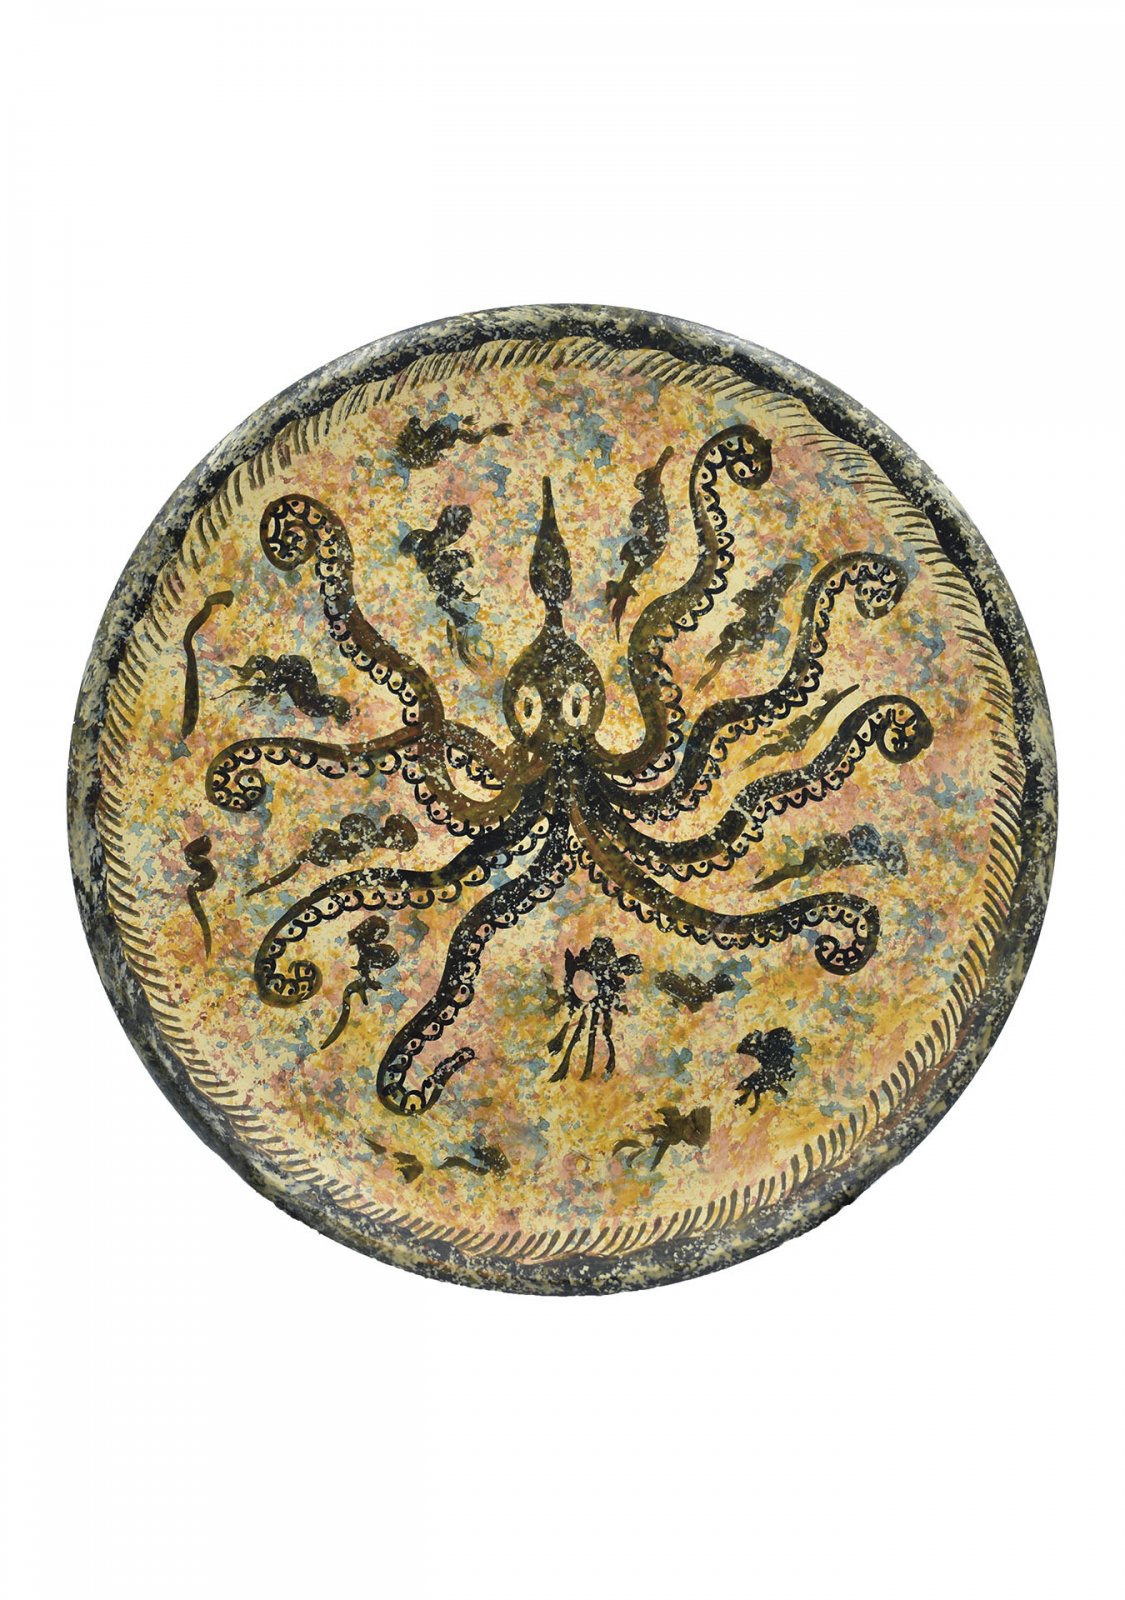 Greek ceramic plate depicting an octopus (24cm)